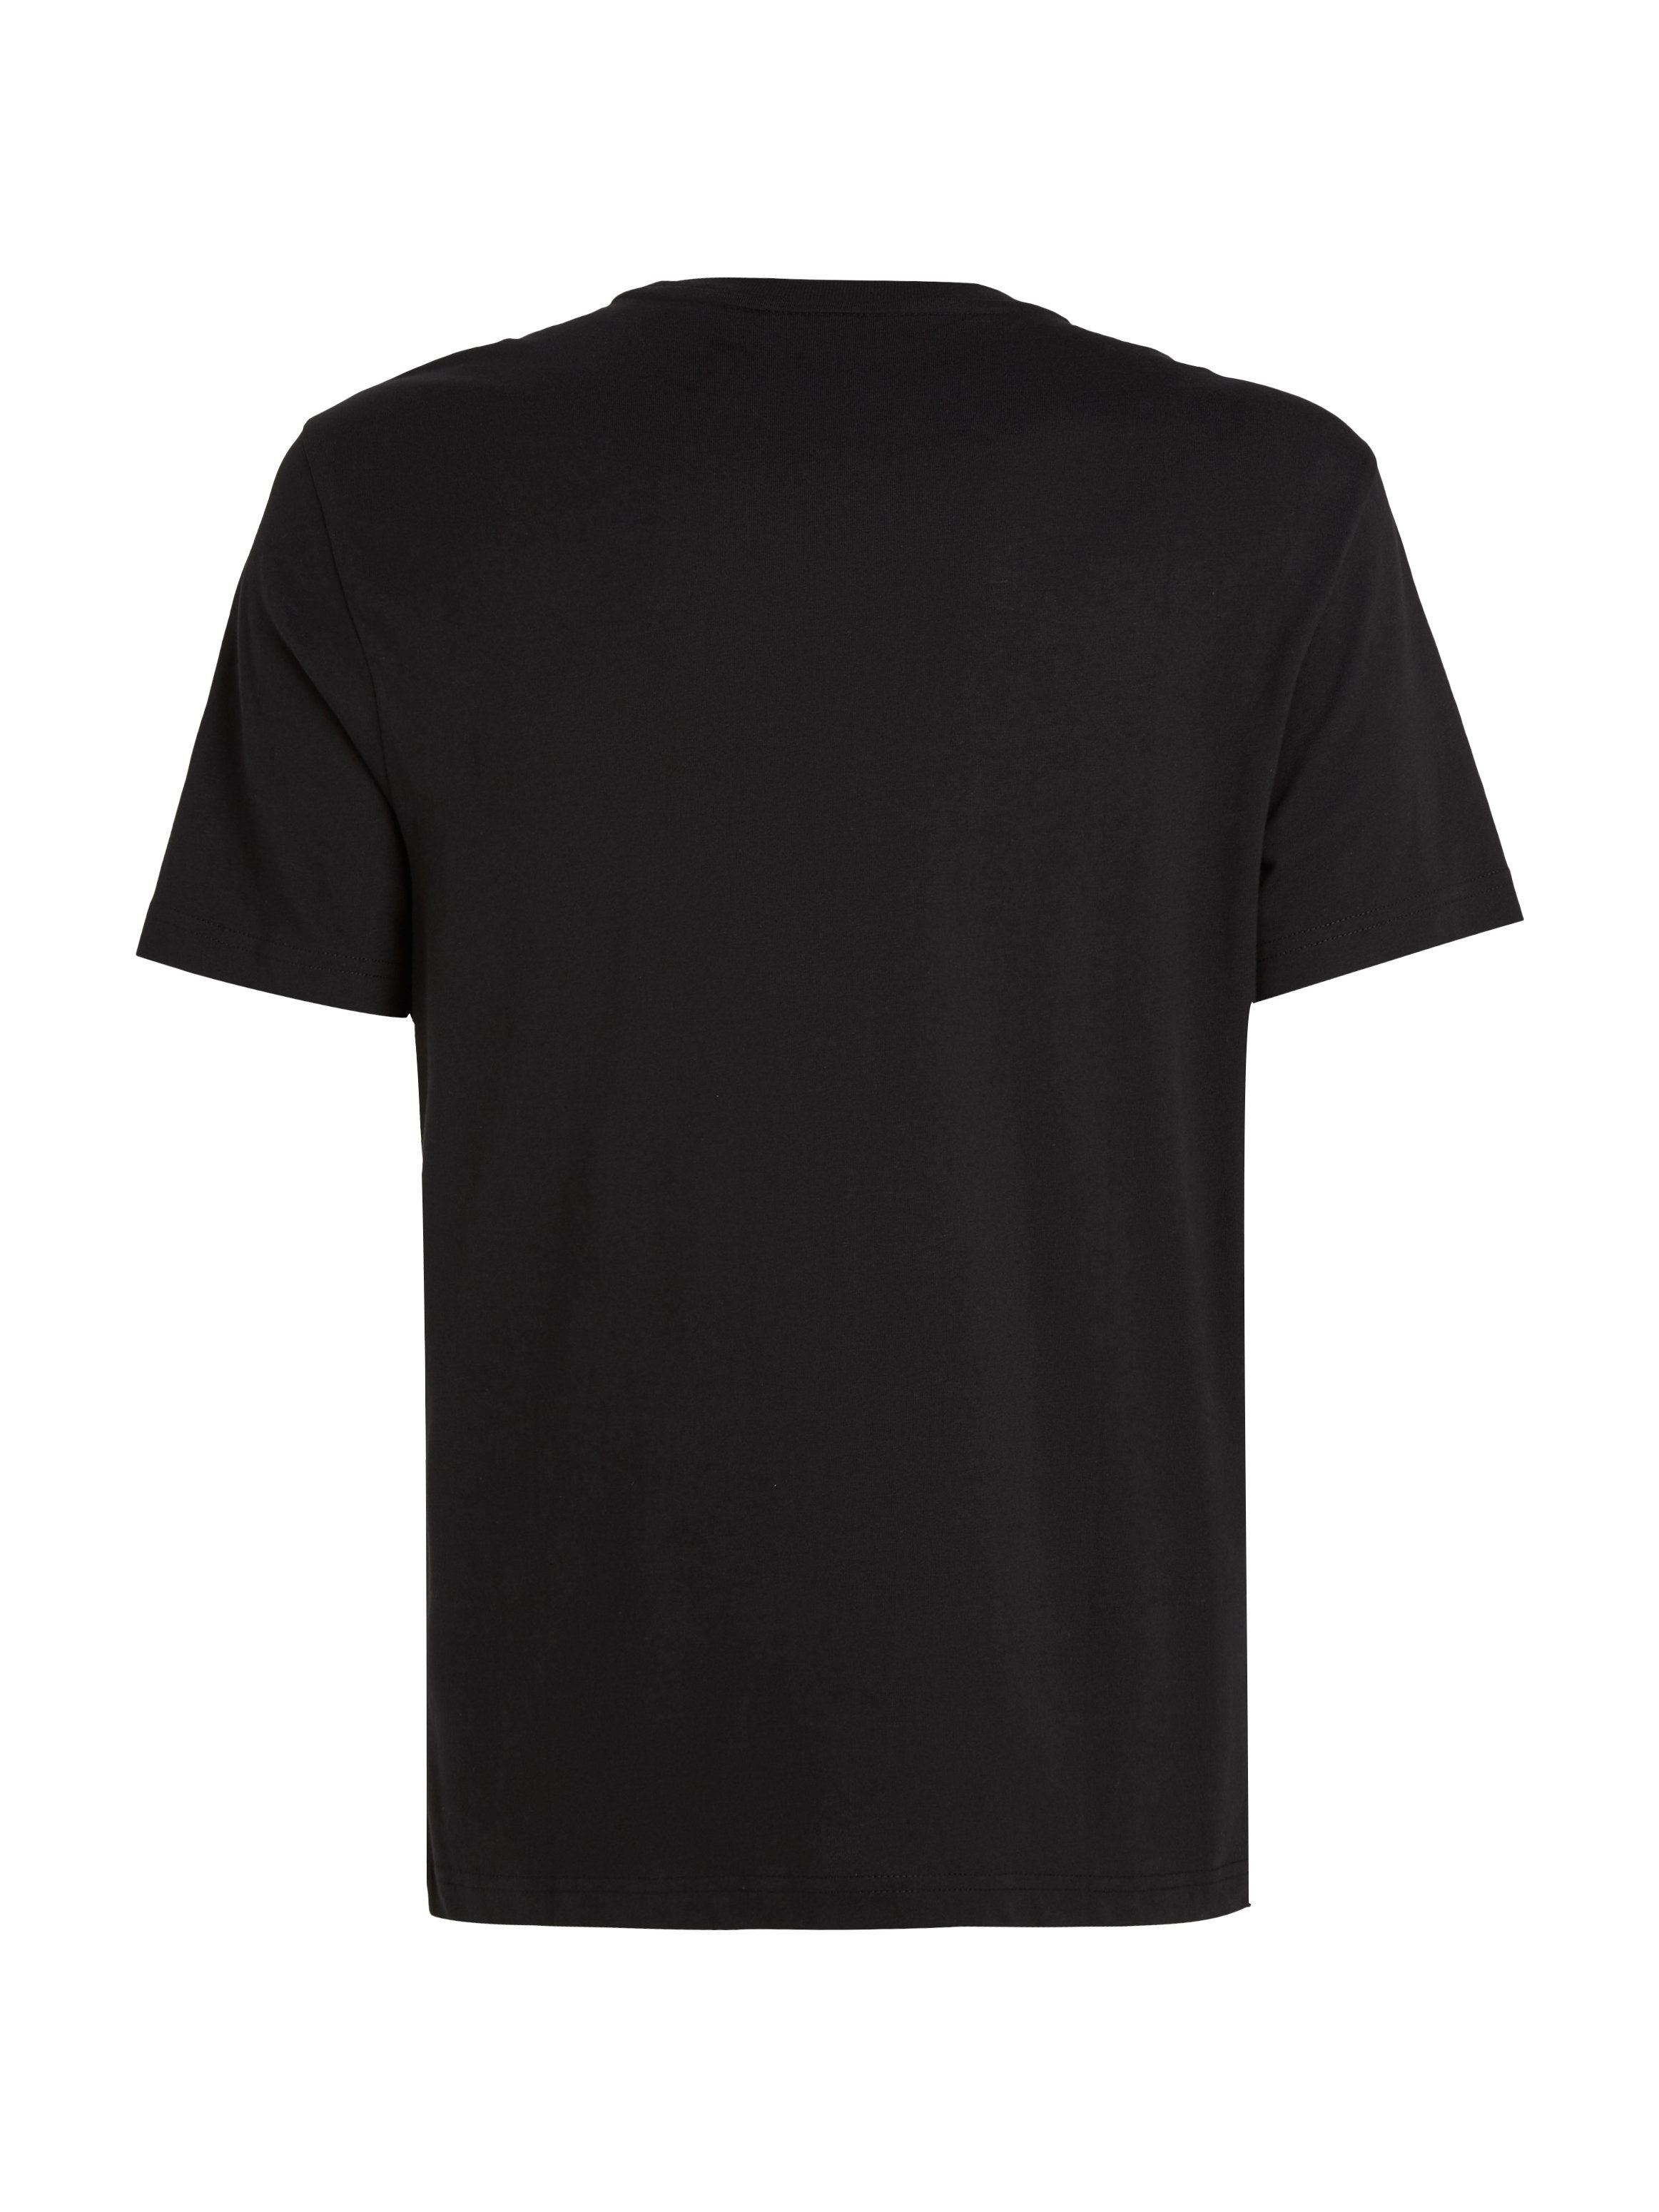 Calvin Klein BOX LOGO T-Shirt Black OVERLAY Ck T-SHIRT